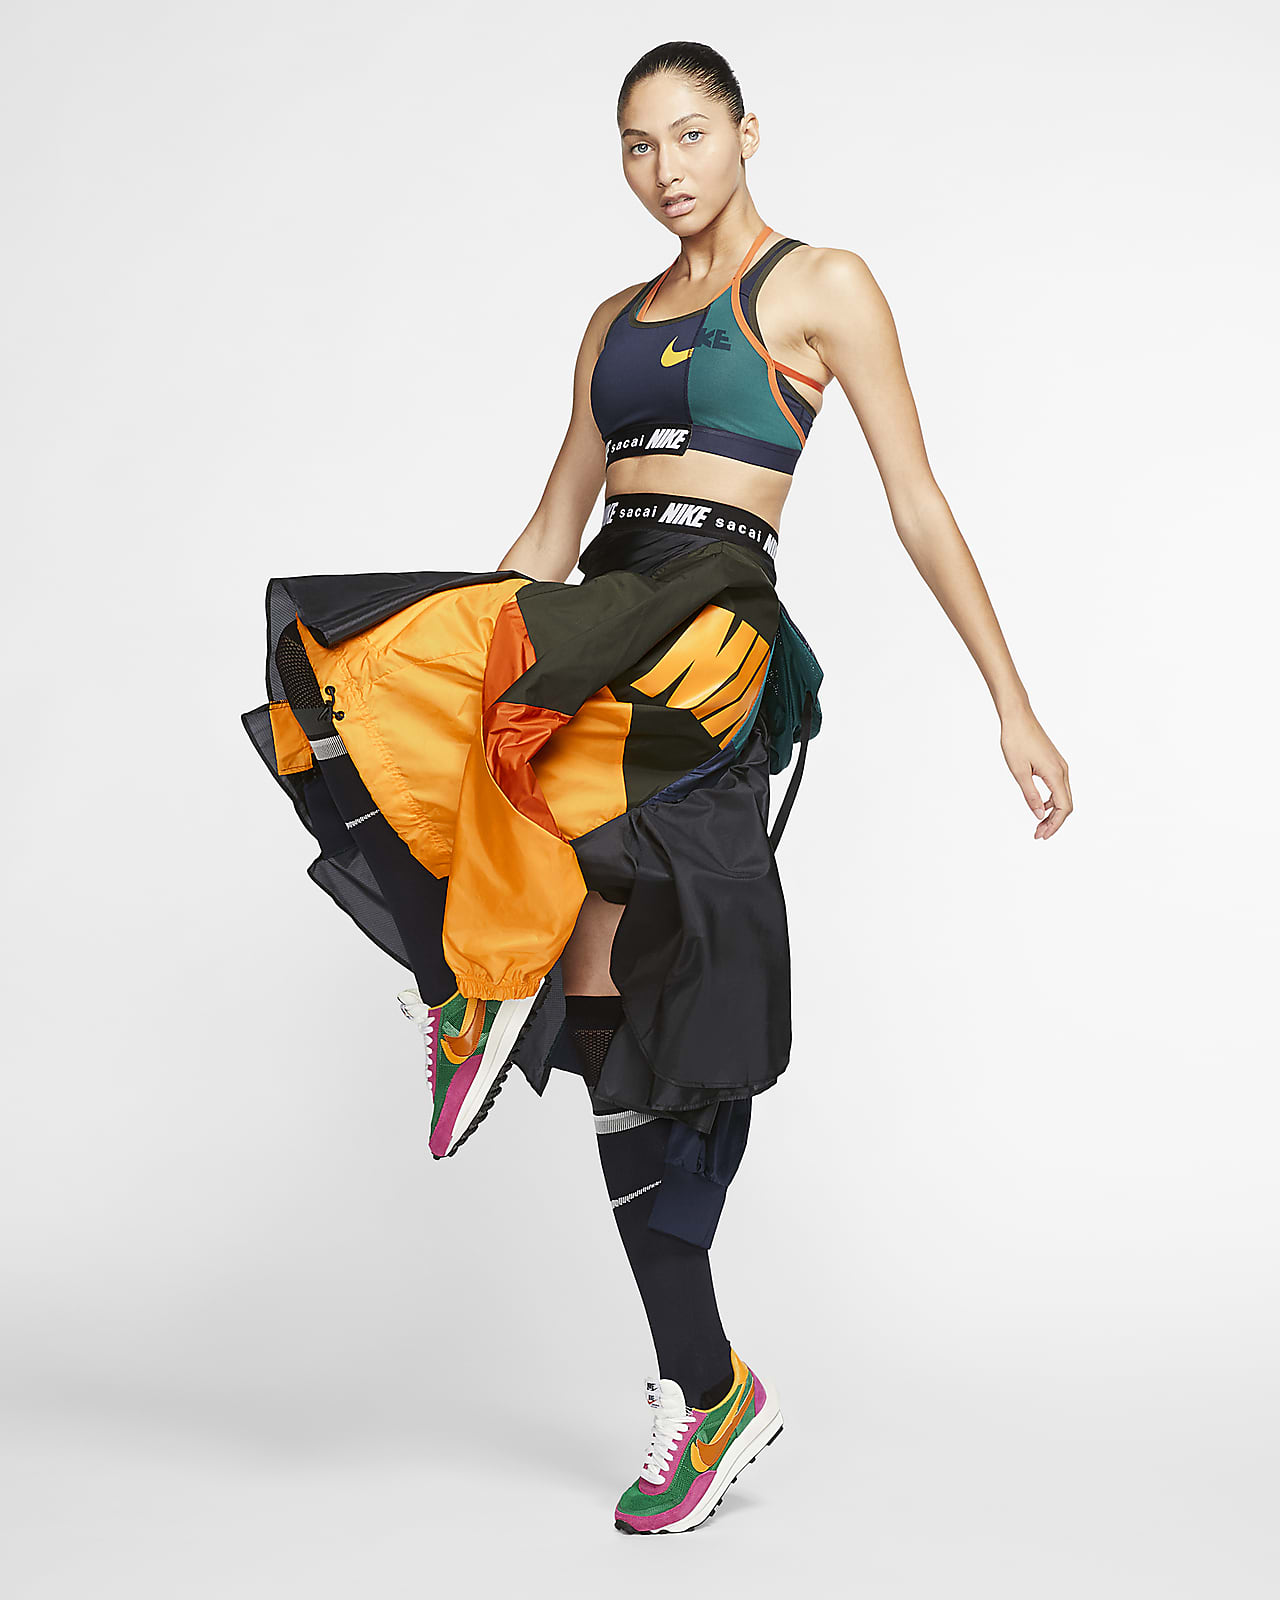 Nike x sacai Women's Skirt. Nike JP